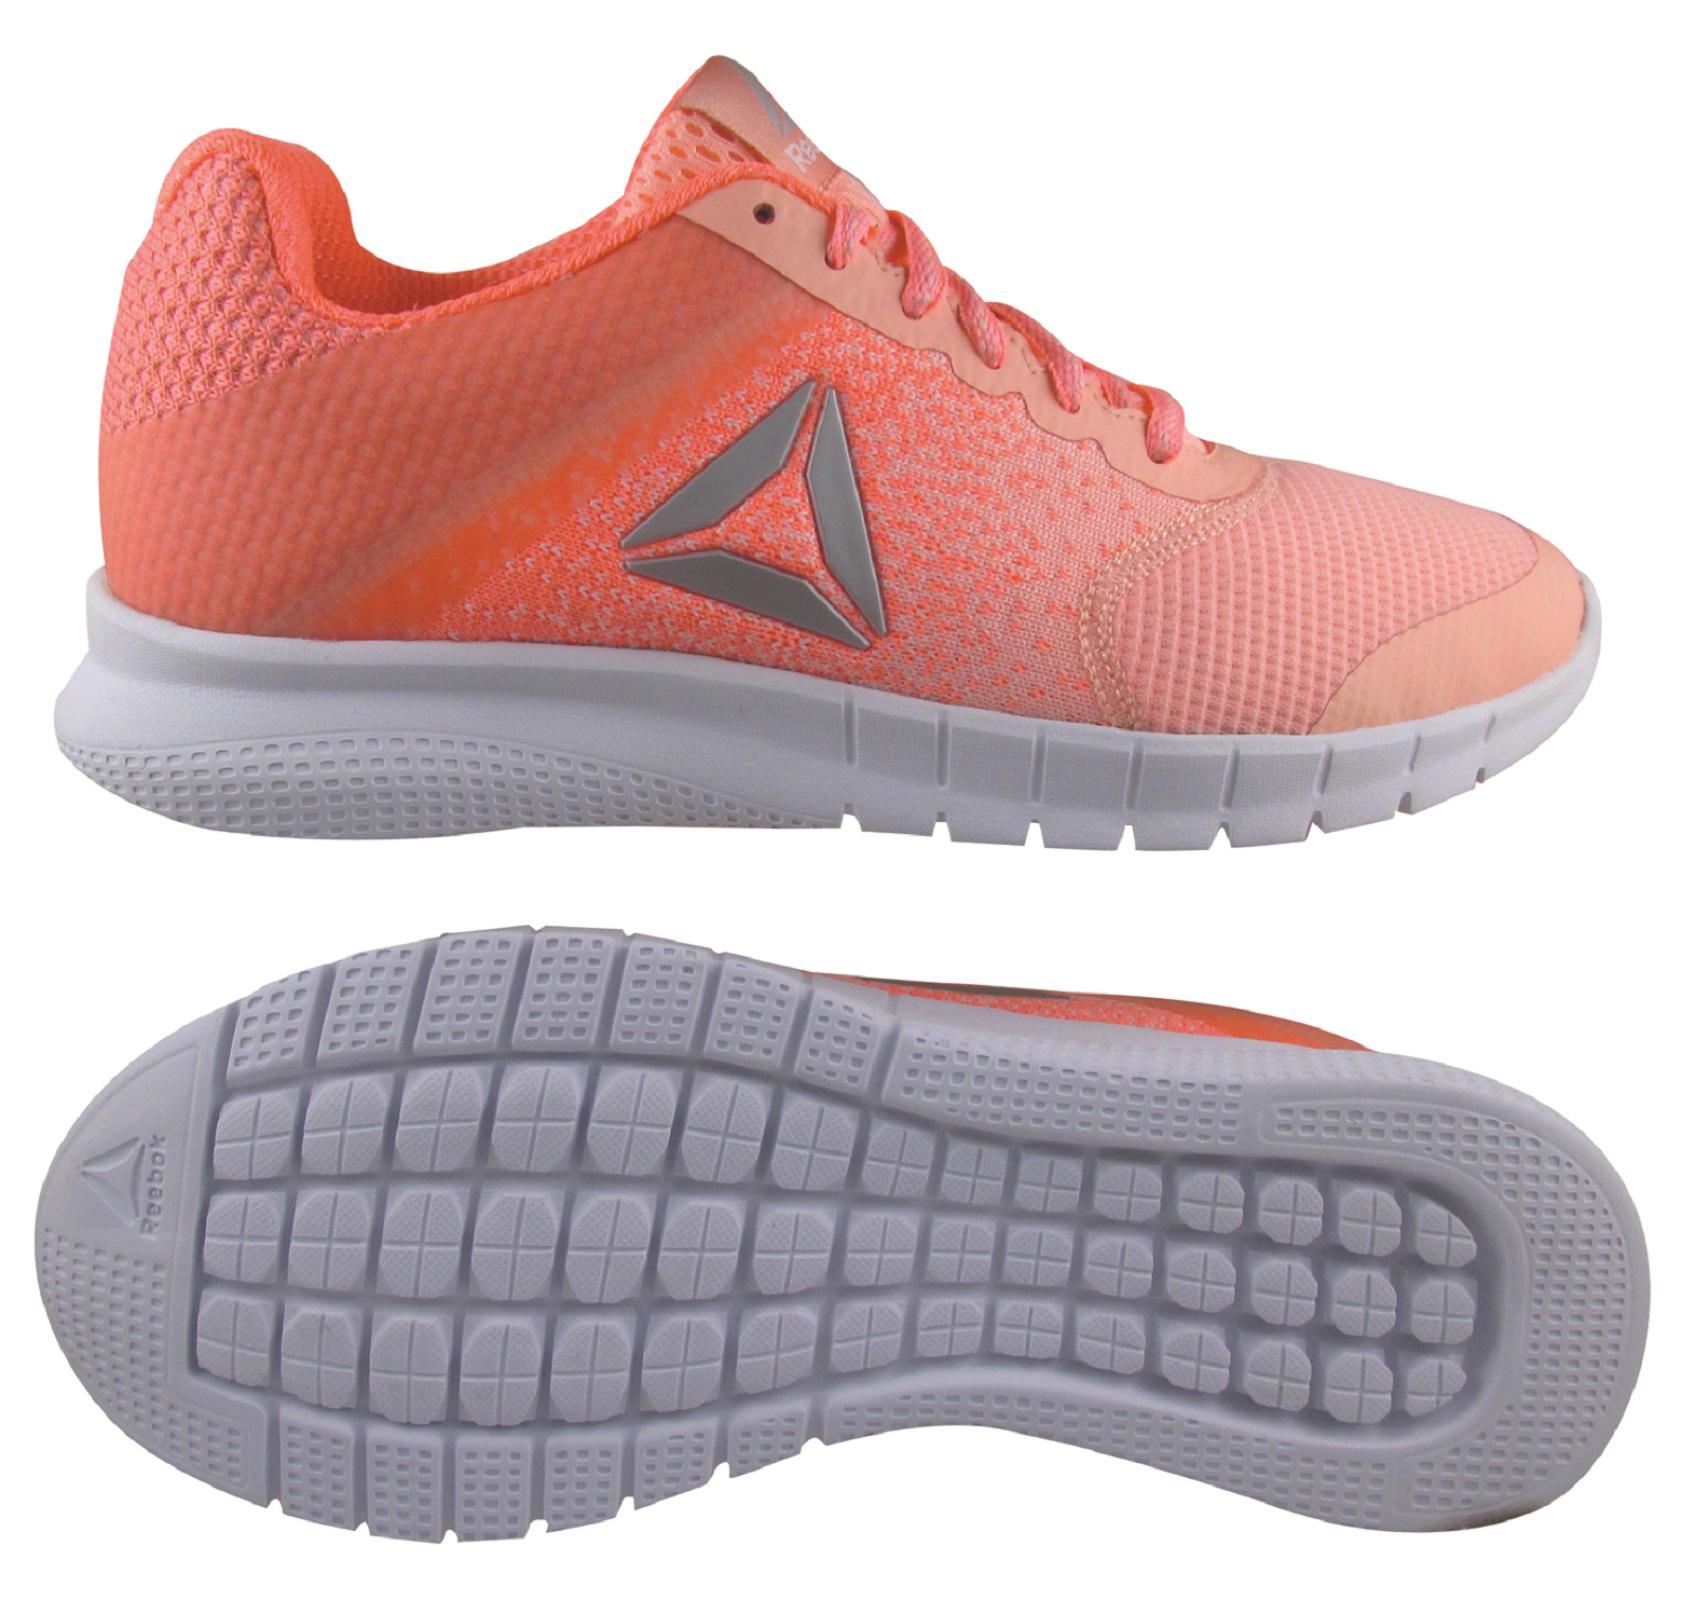 Reebok Women's Instalite Running Shoe - Orange